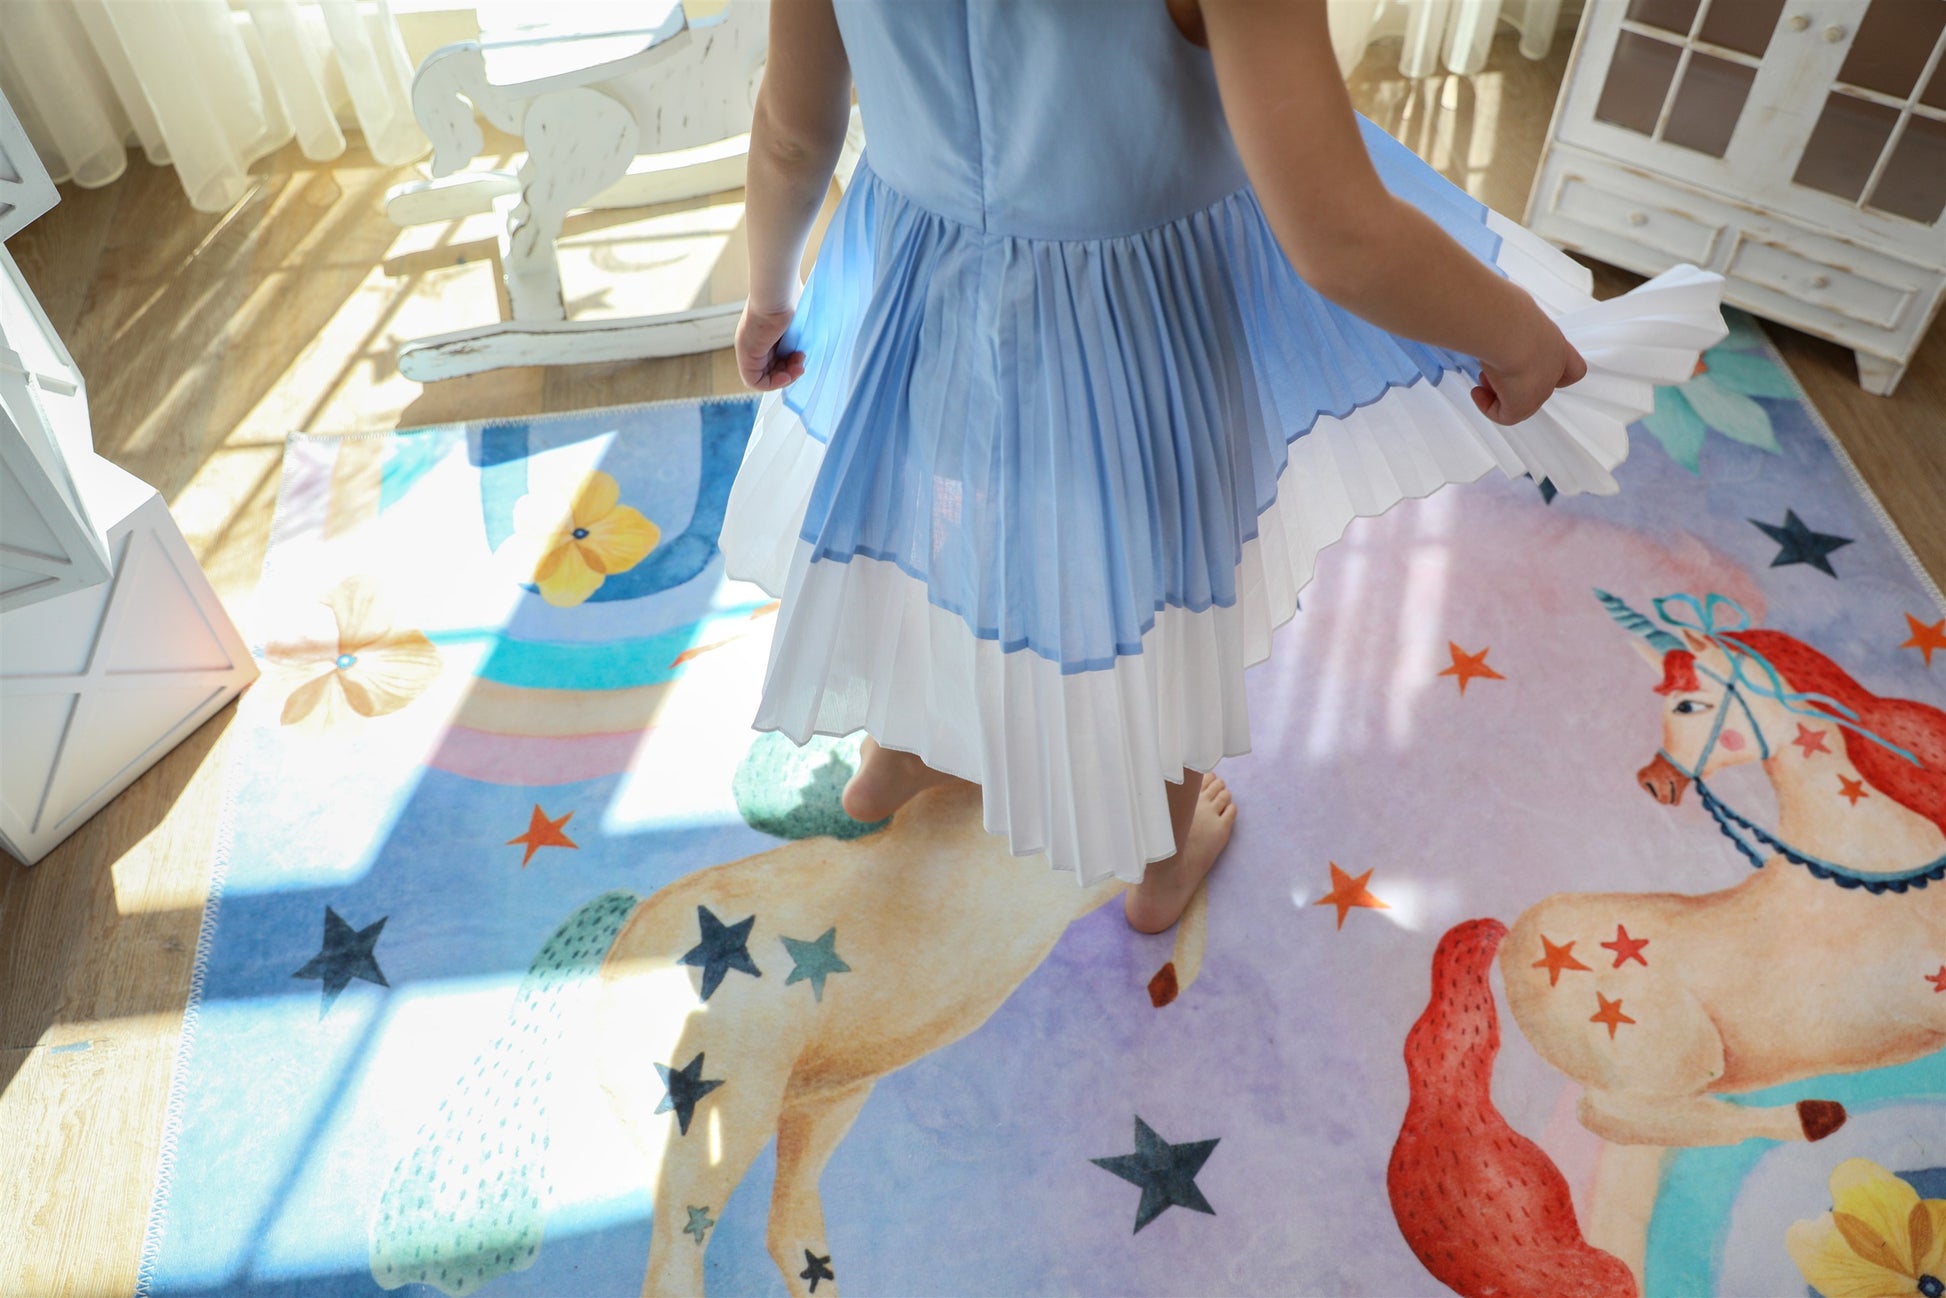 Unicorn carpet for kids. Unicorn rug for kids room. Machine washable and nontoxic rug